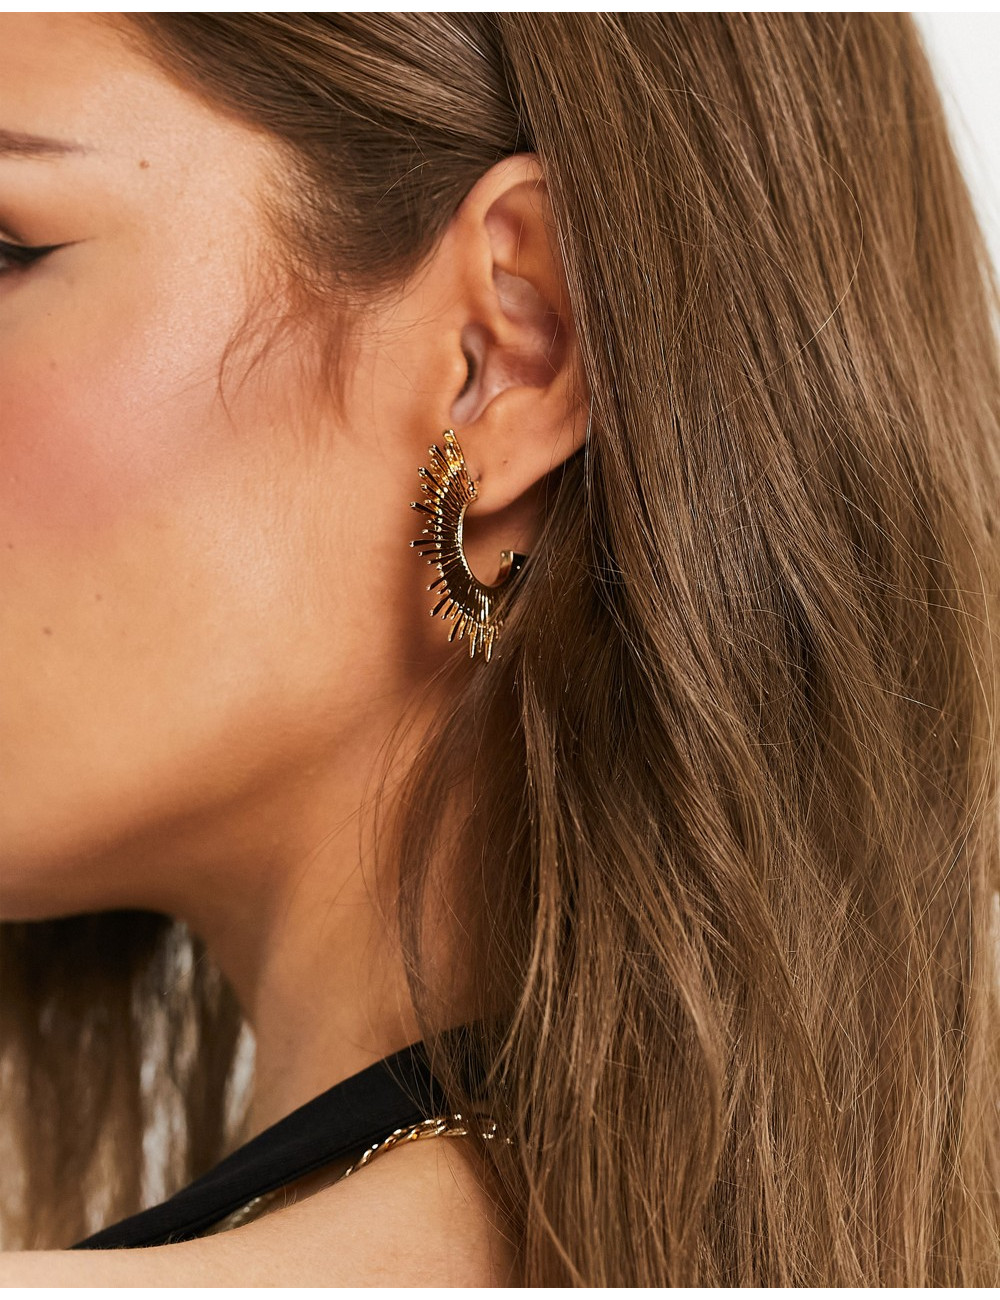 SVNX oversized earrings